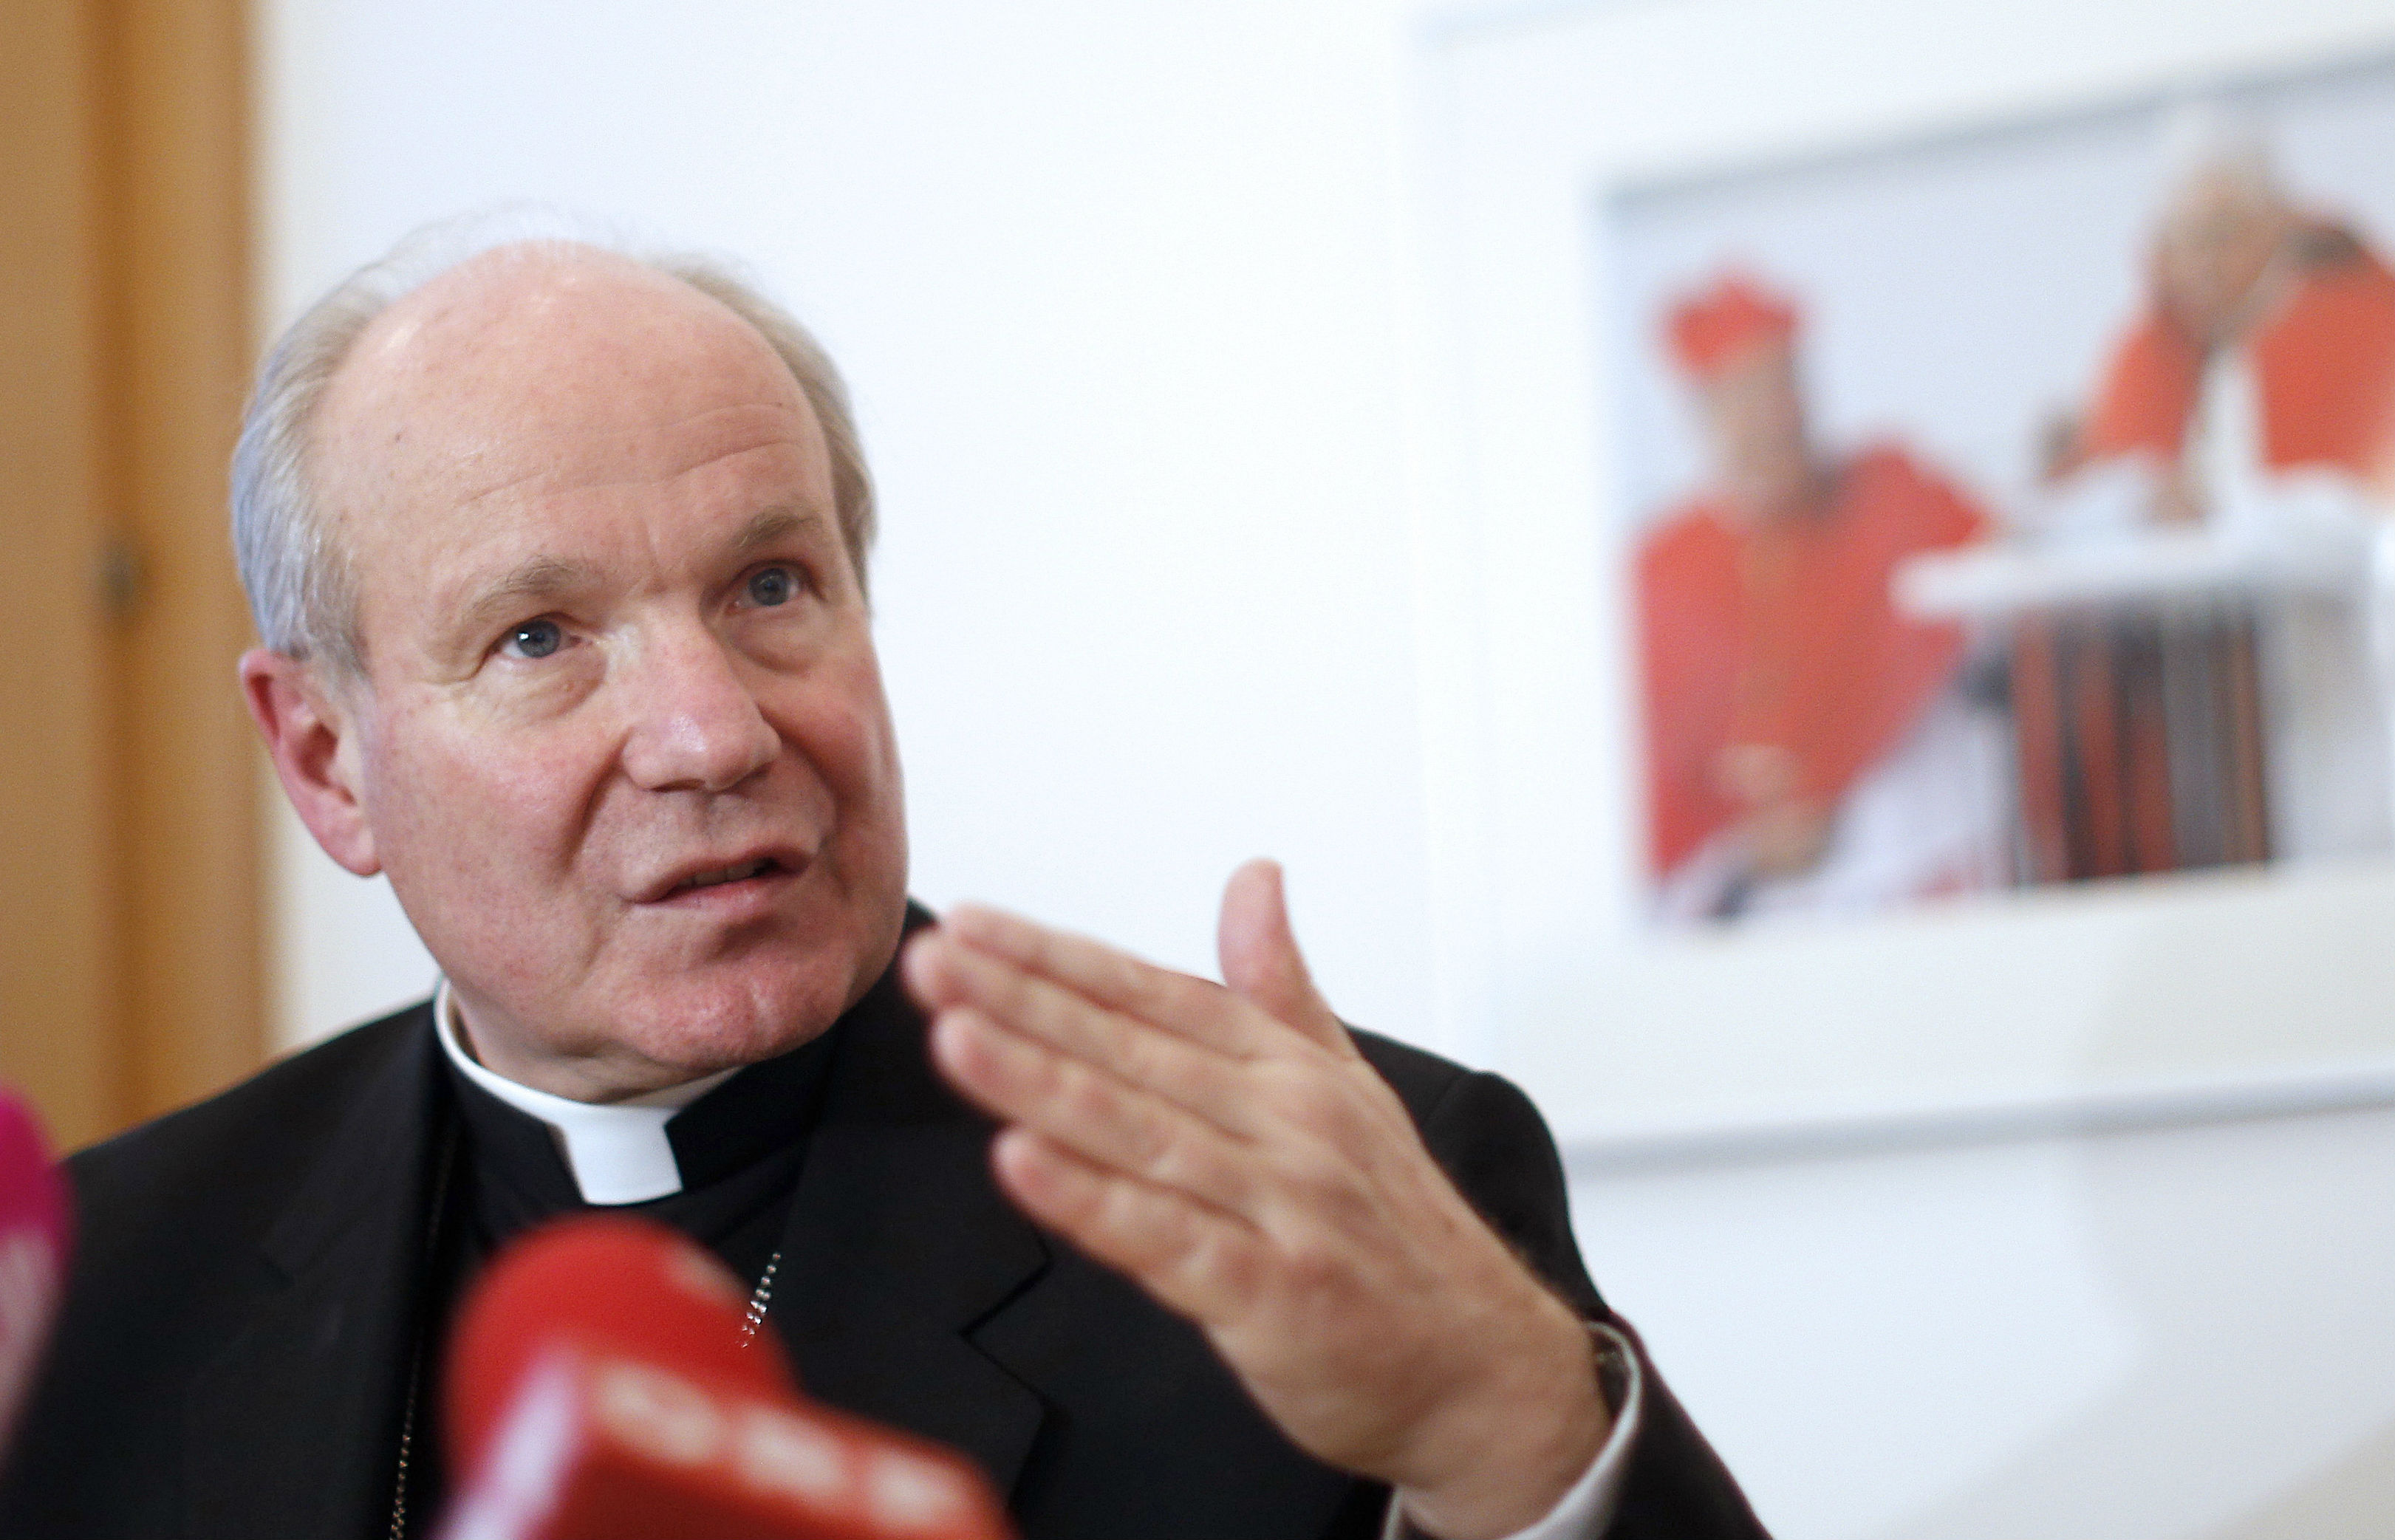 Schönborn appeals to retain ‘distinctiveness’ of marriage